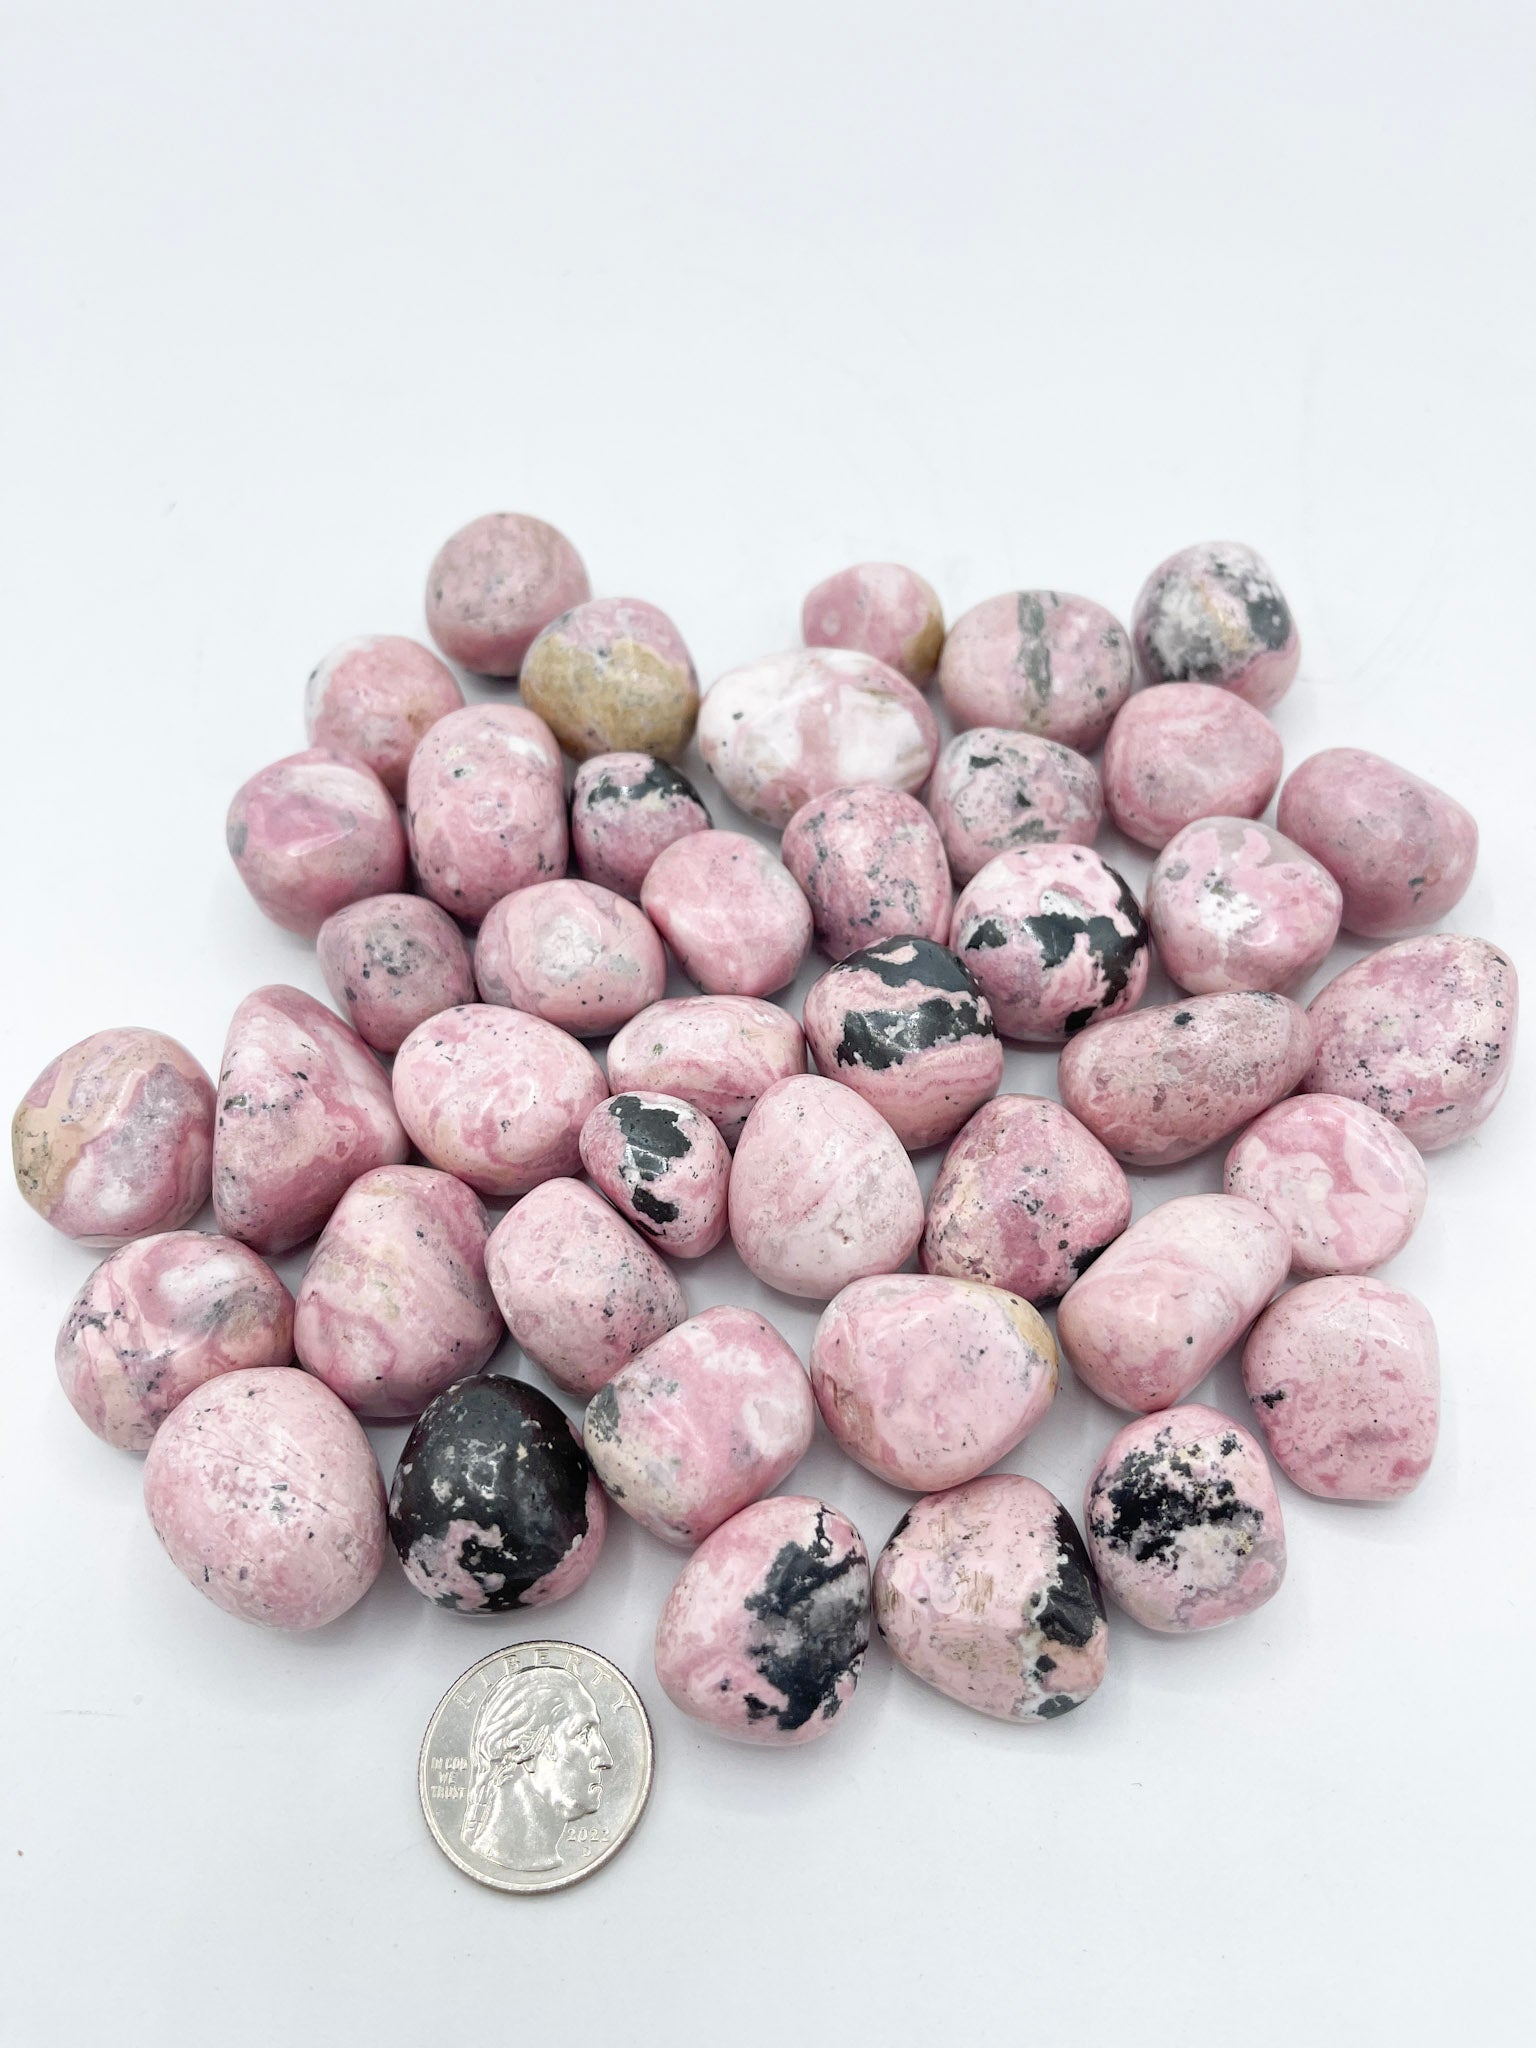 Wholesale rhodonite tumbled stones bulk 1kg lot